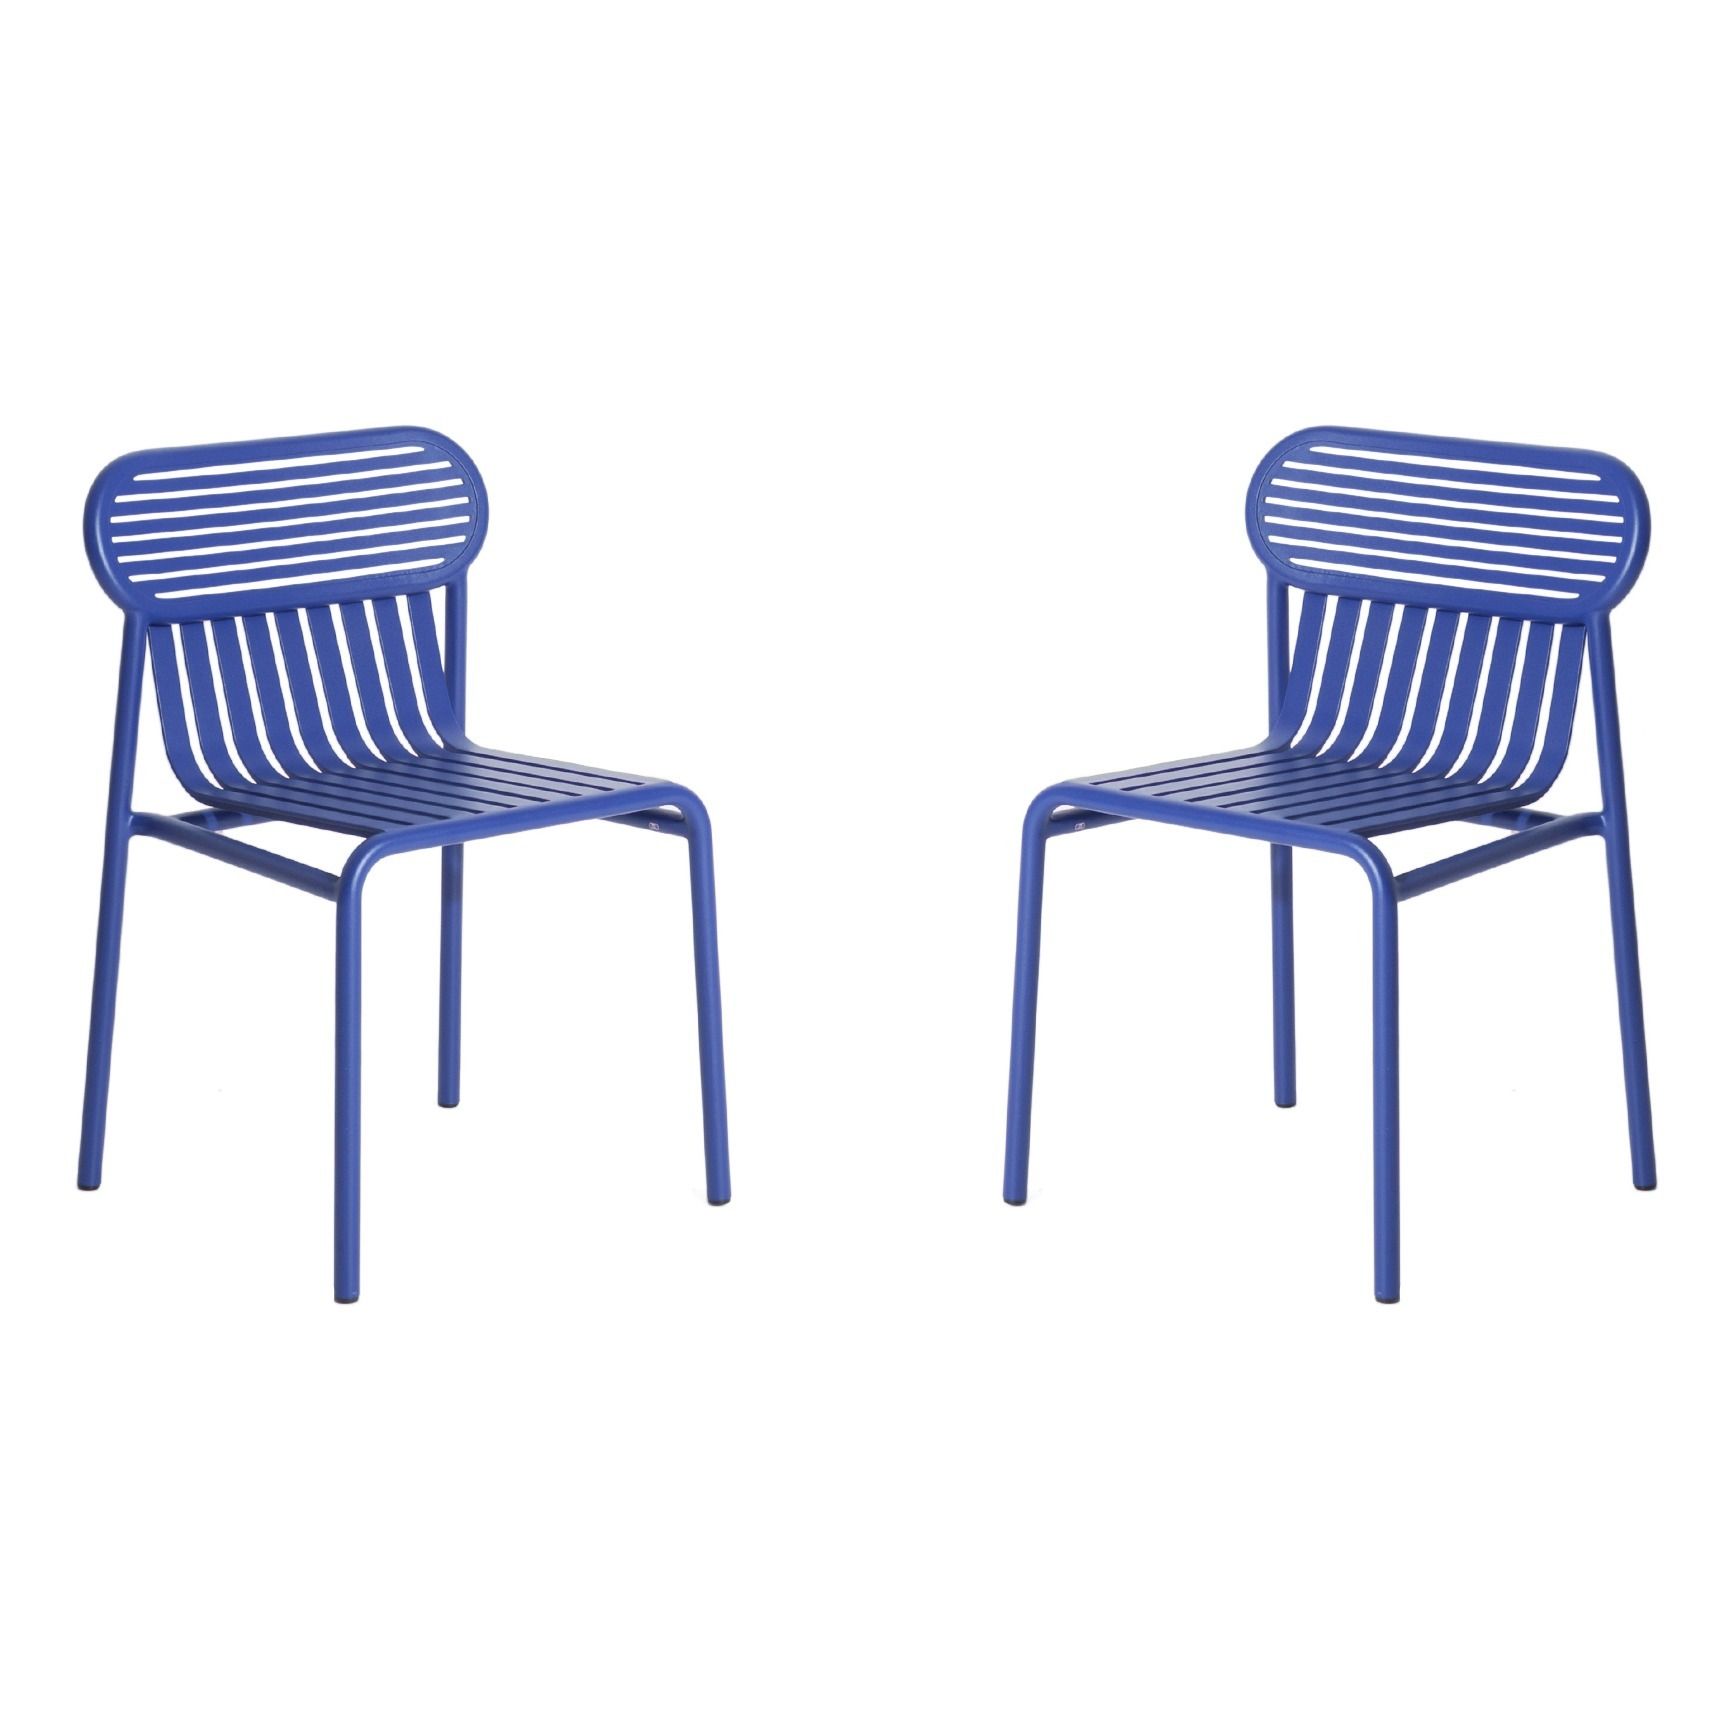 Petite friture - Chaise Week-end - Lot de 2 - Bleu